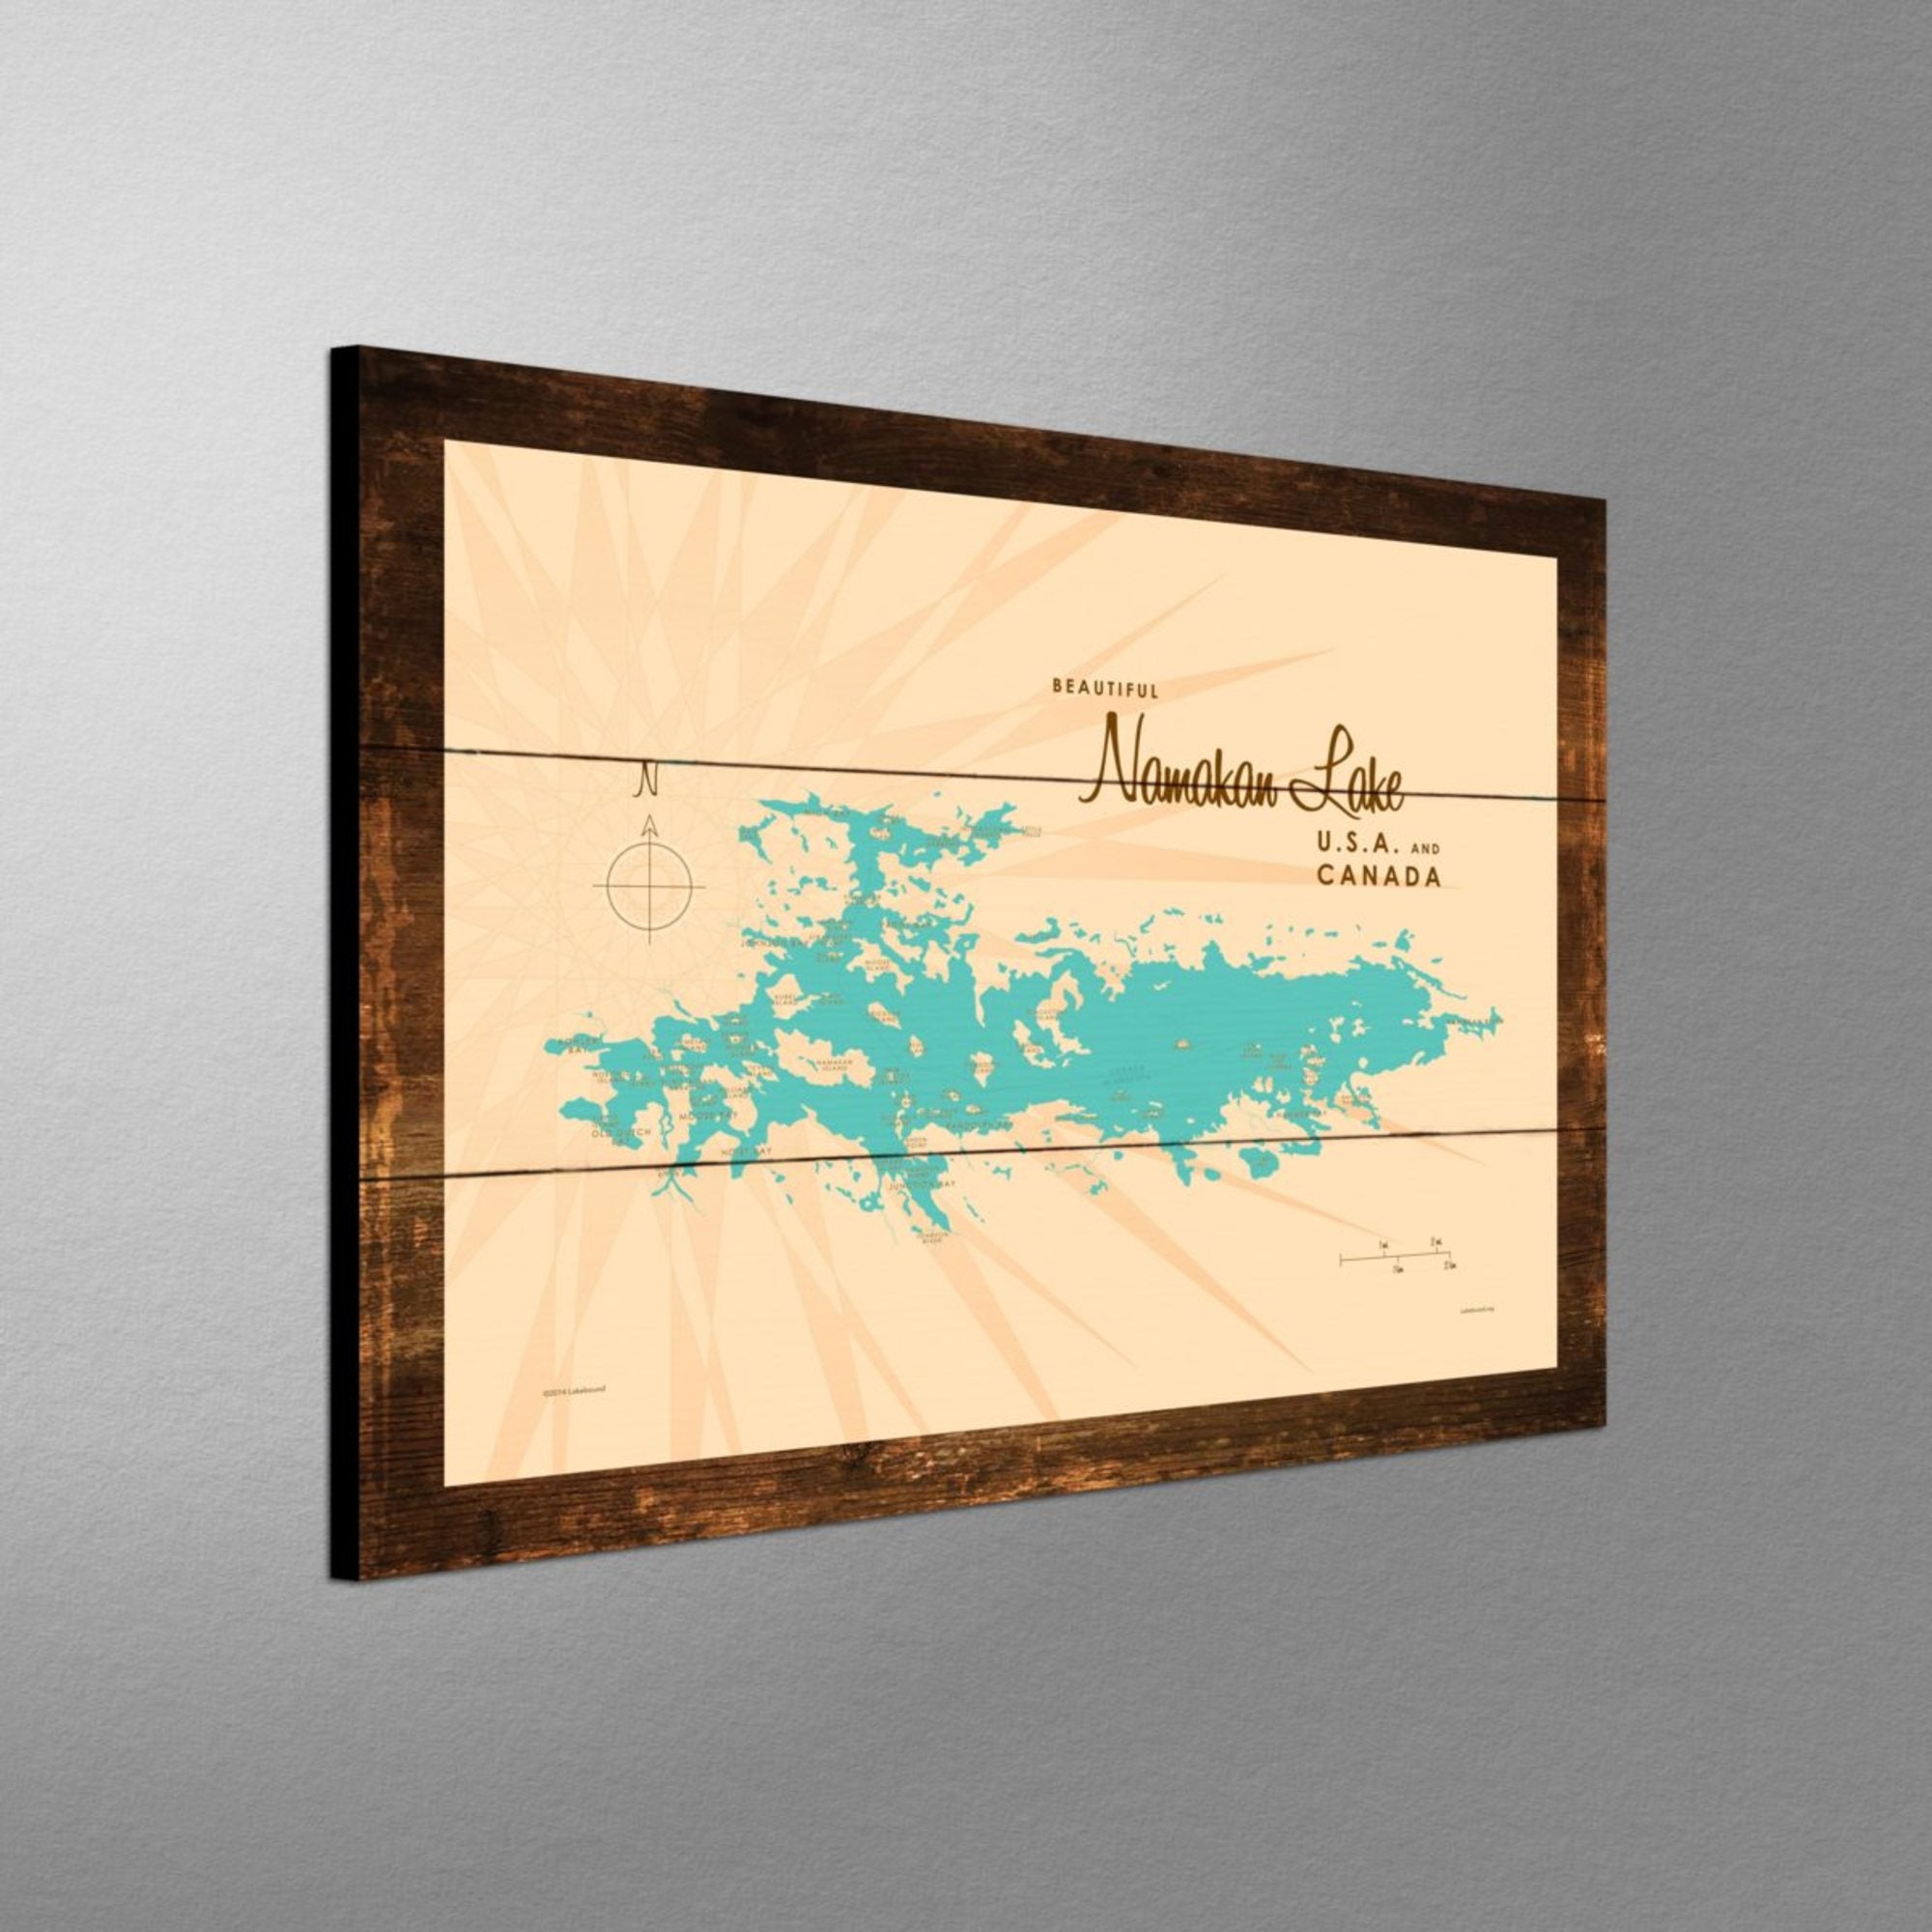 Namakan Lake Minnesota, Rustic Wood Sign Map Art